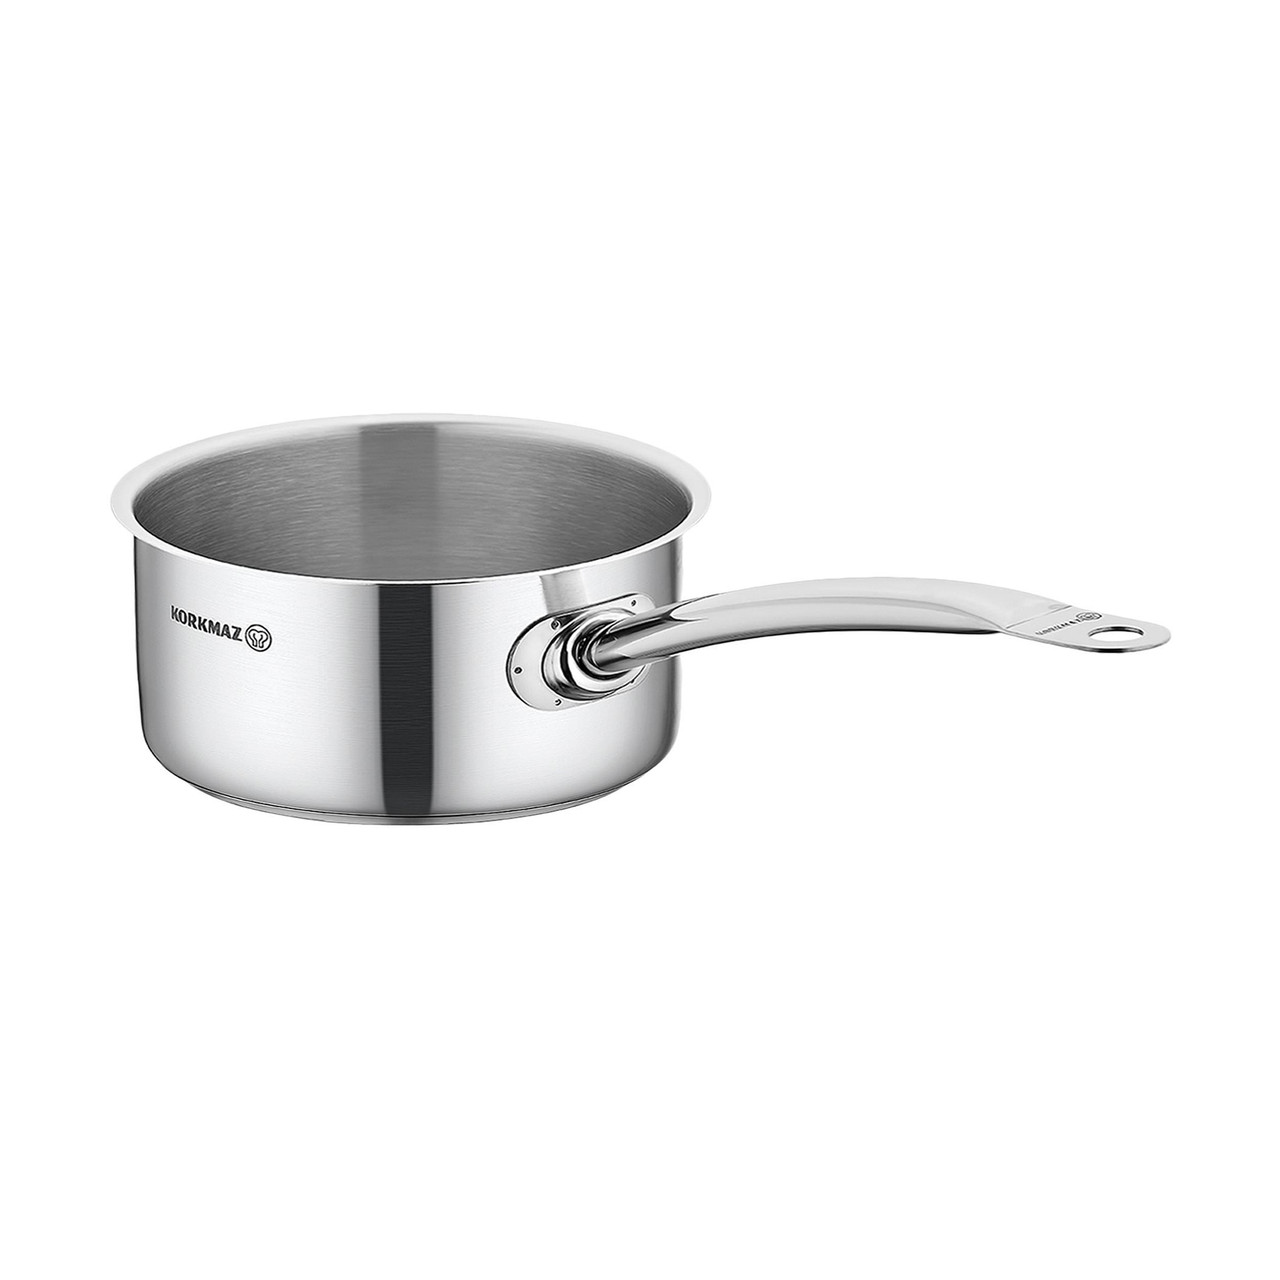 Korkmaz Gastro Proline 1.9 Liter Stainless Steel Saucepan in Silver